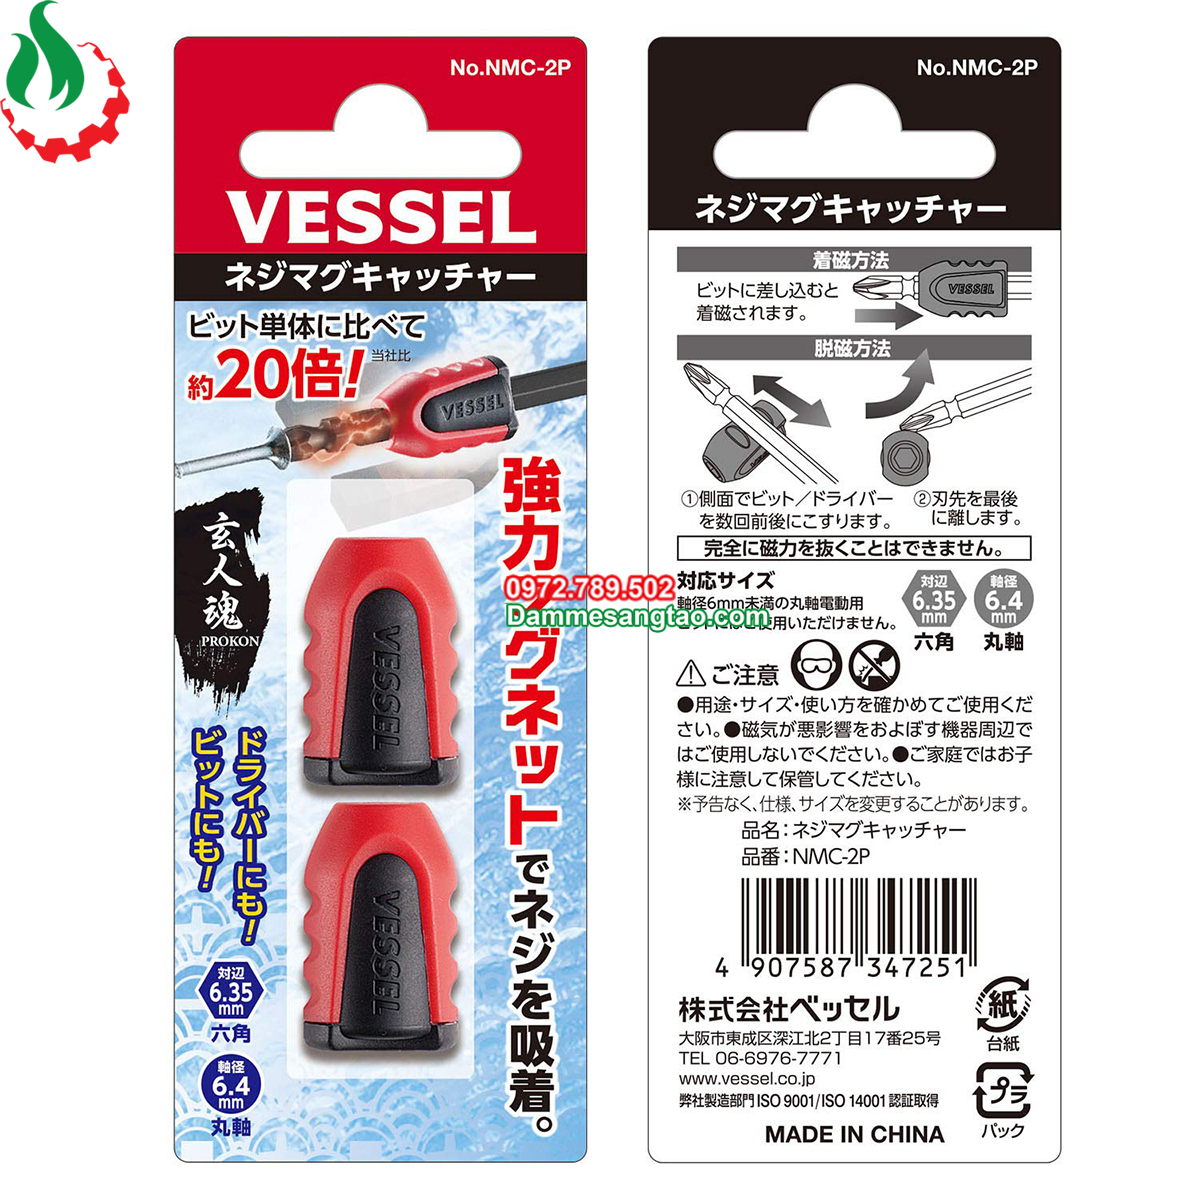 Nam châm trợ lực mũi vít Vessel (Made in Japan)